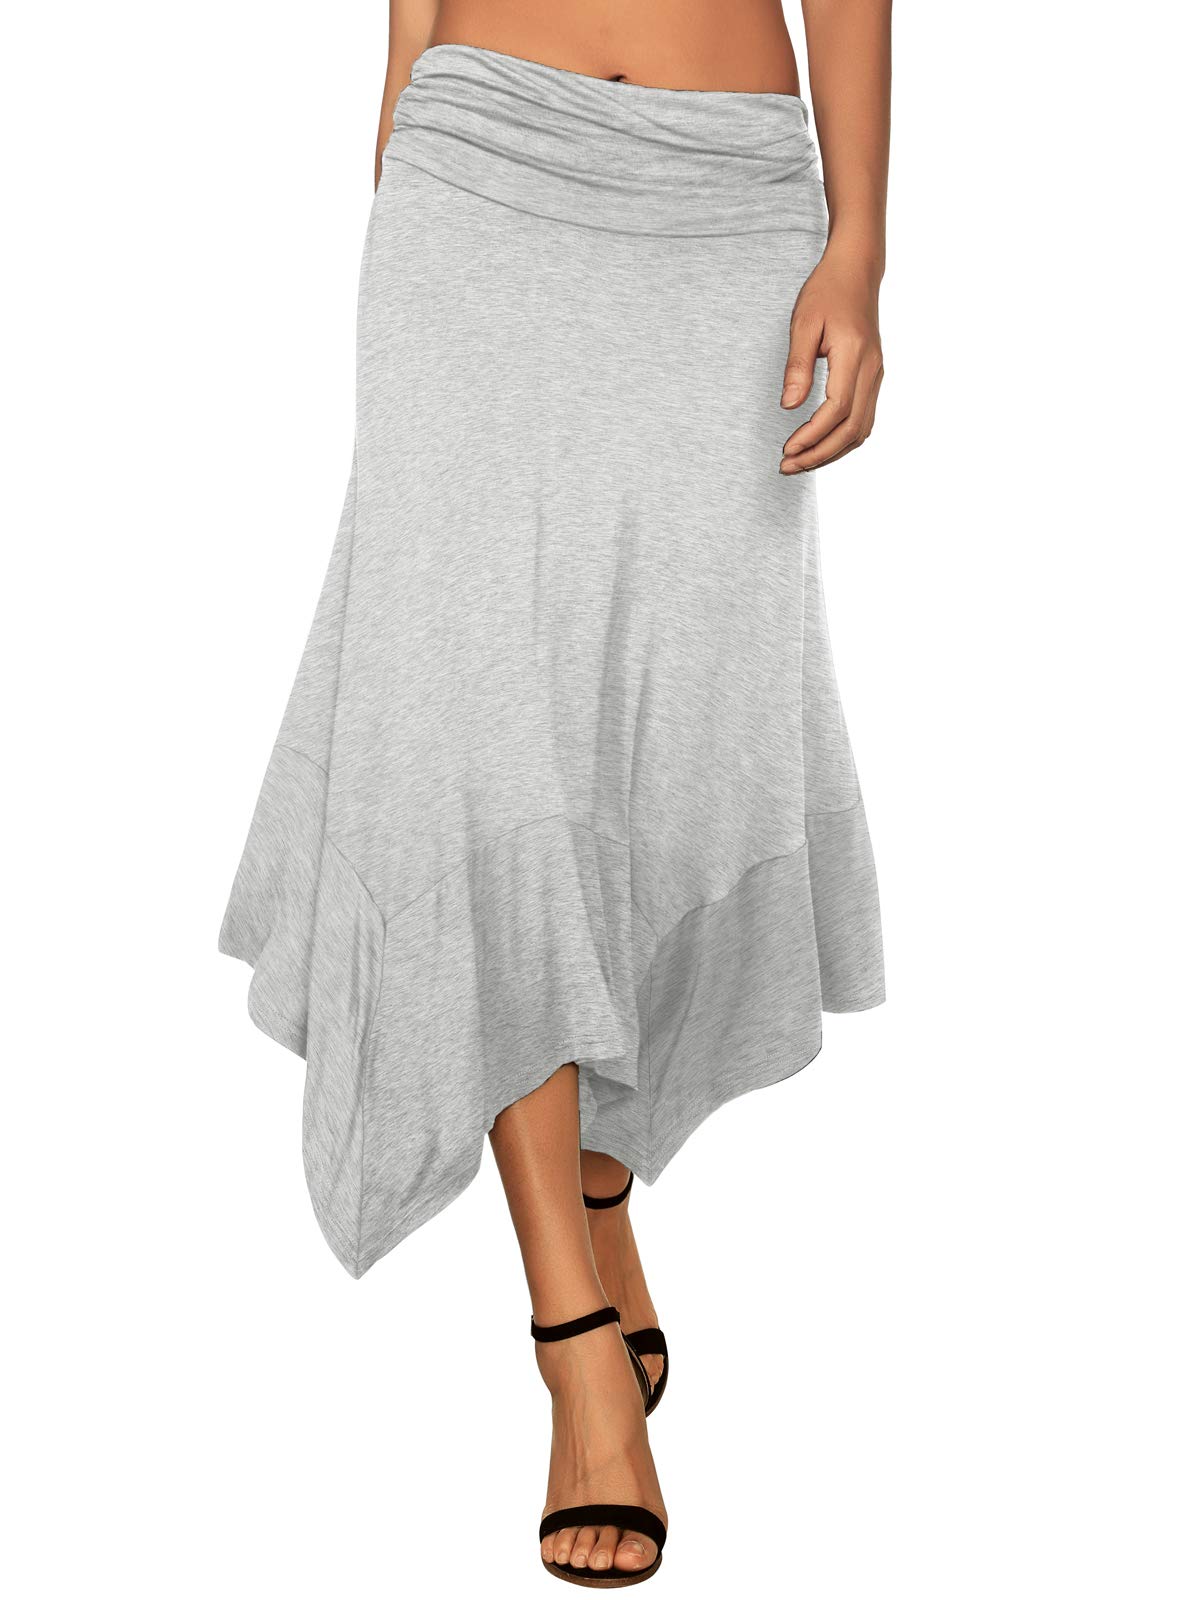 DJT Women's Grey Flowy Handkerchief Hemline Midi Skirt